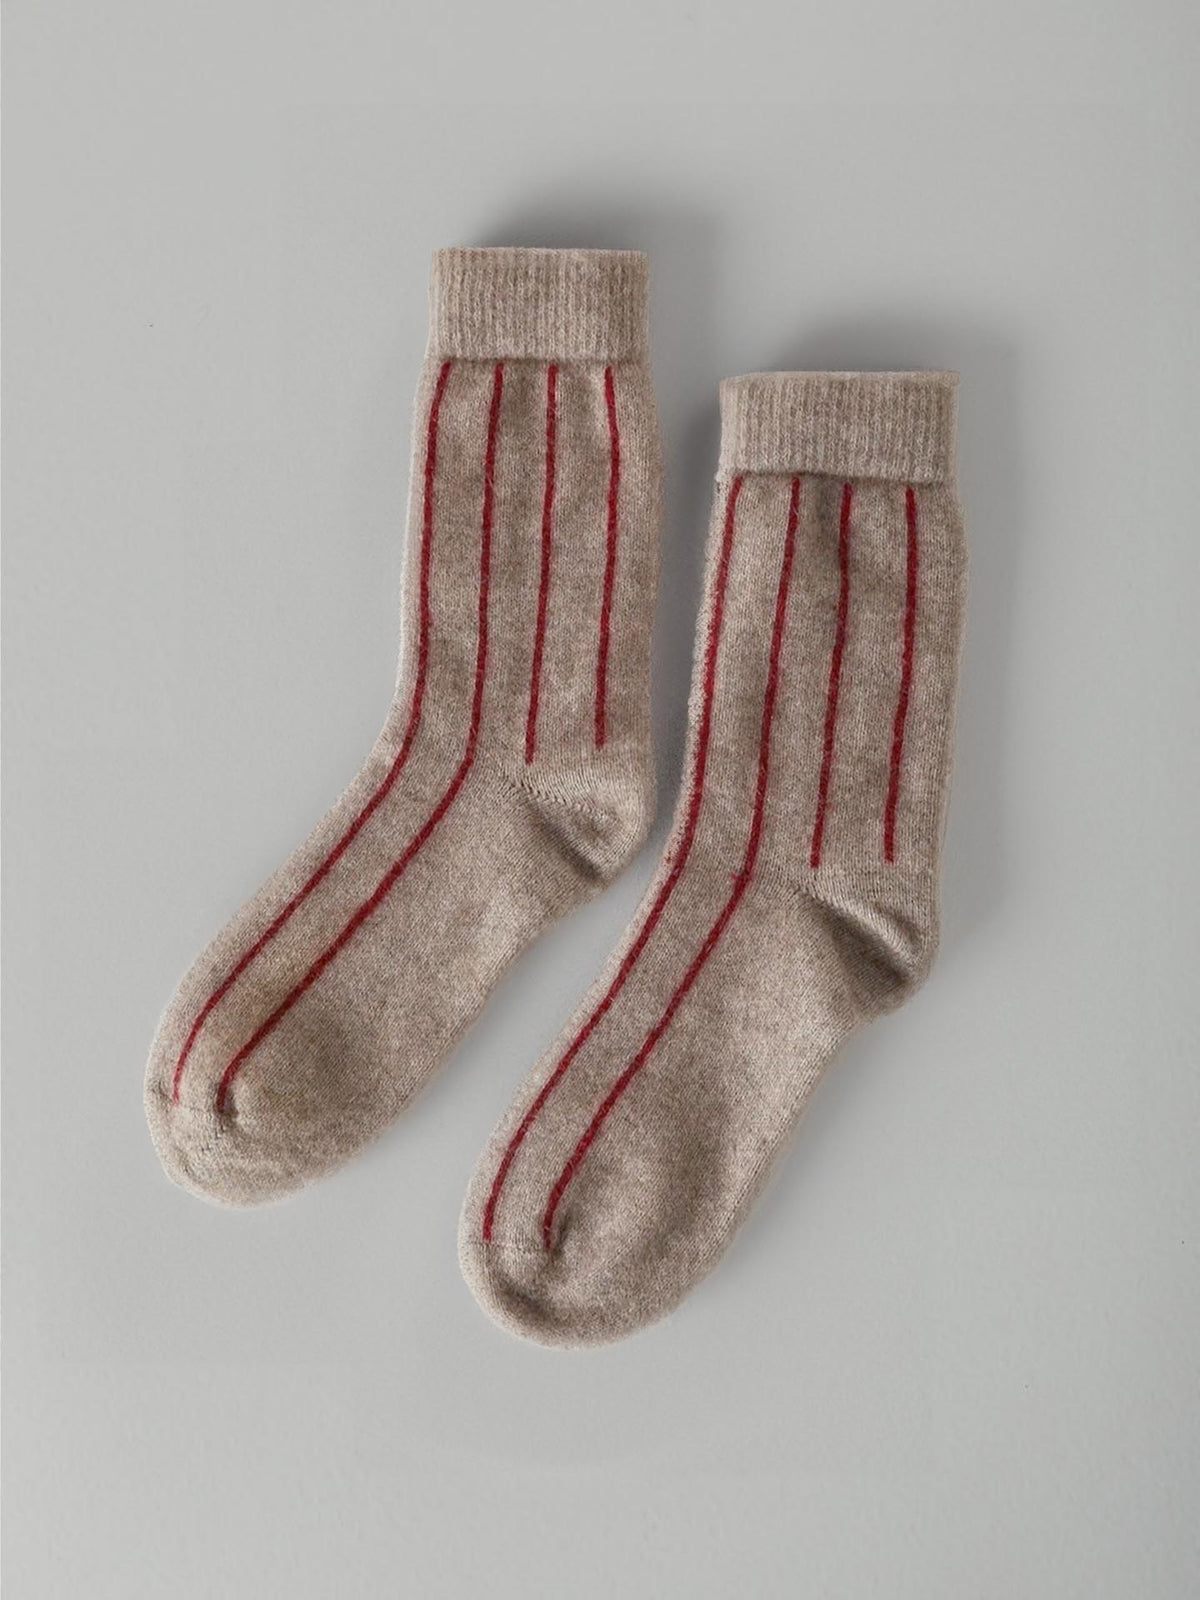 A pair of Francie Possum Merino Socks – Natural &amp; Poppy Stripe displayed on a light gray background.